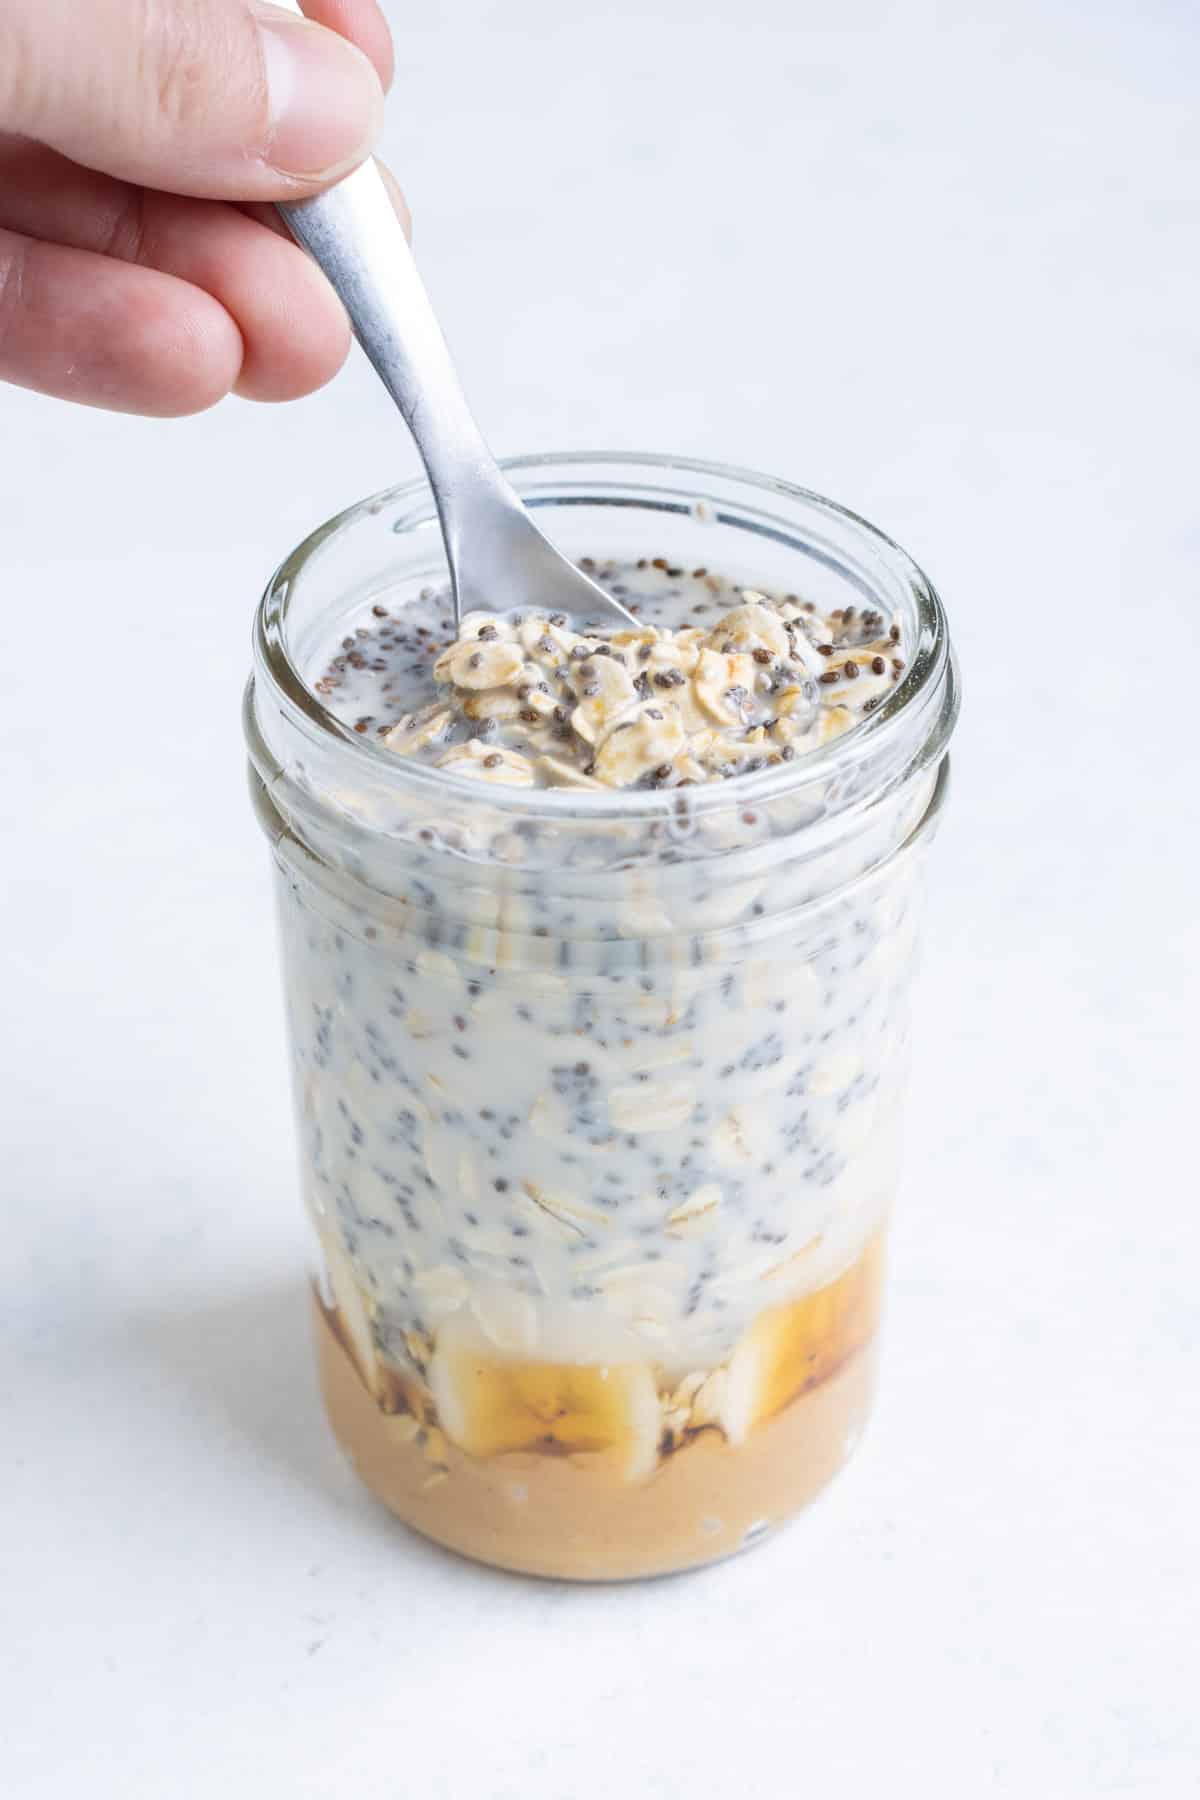 A spoon stirs the oatmeal mixture in a mason jar.